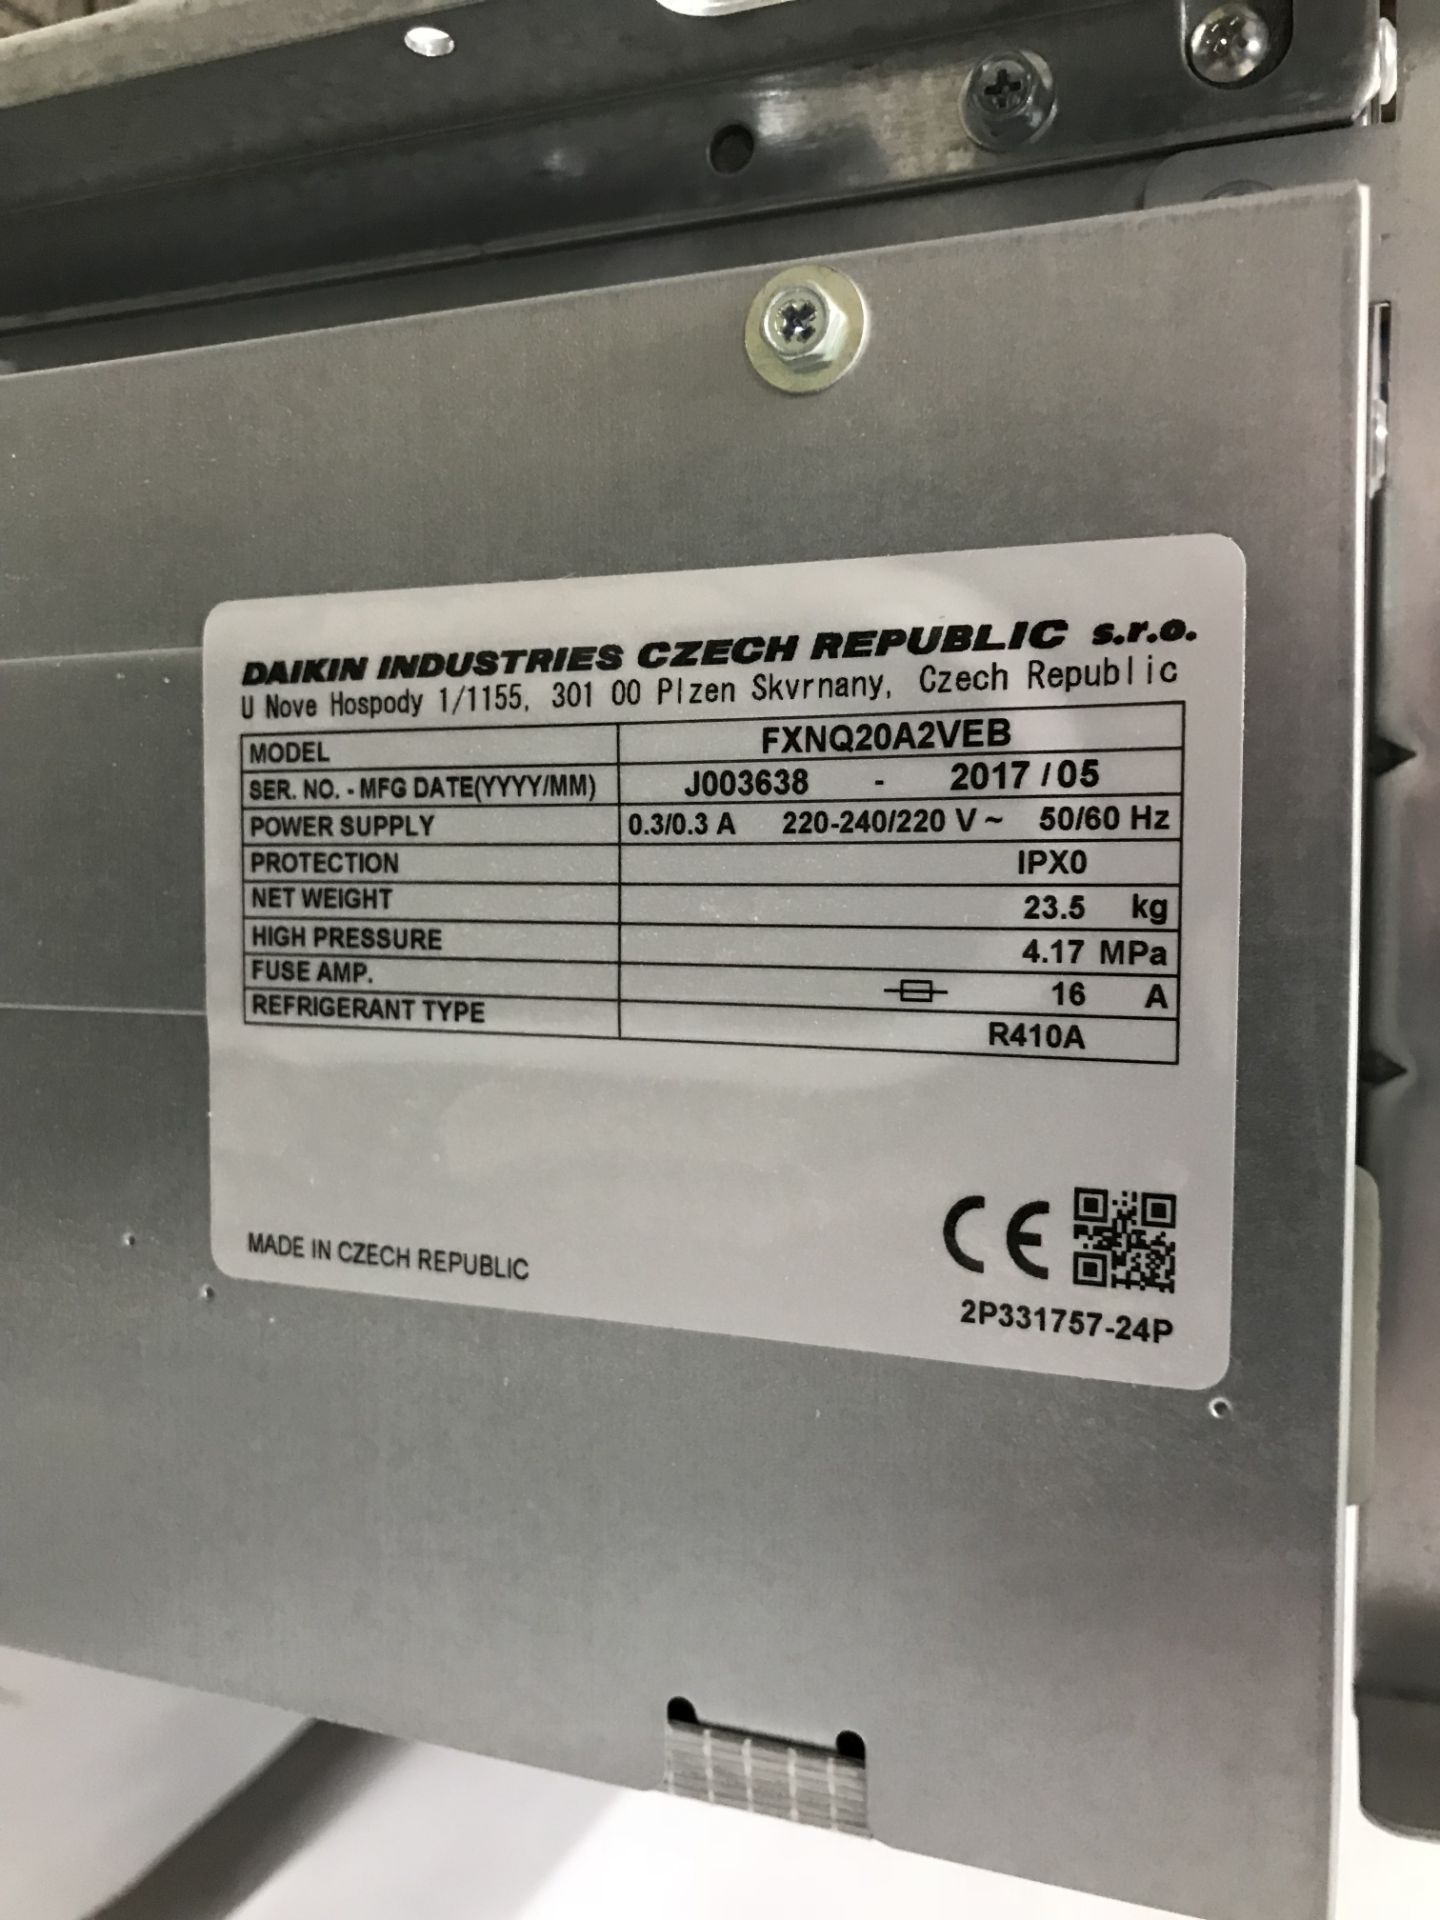 Daikin FXNQ20A2VEB VRV Indoor Air Conditioning Cassette Unit - Image 3 of 5